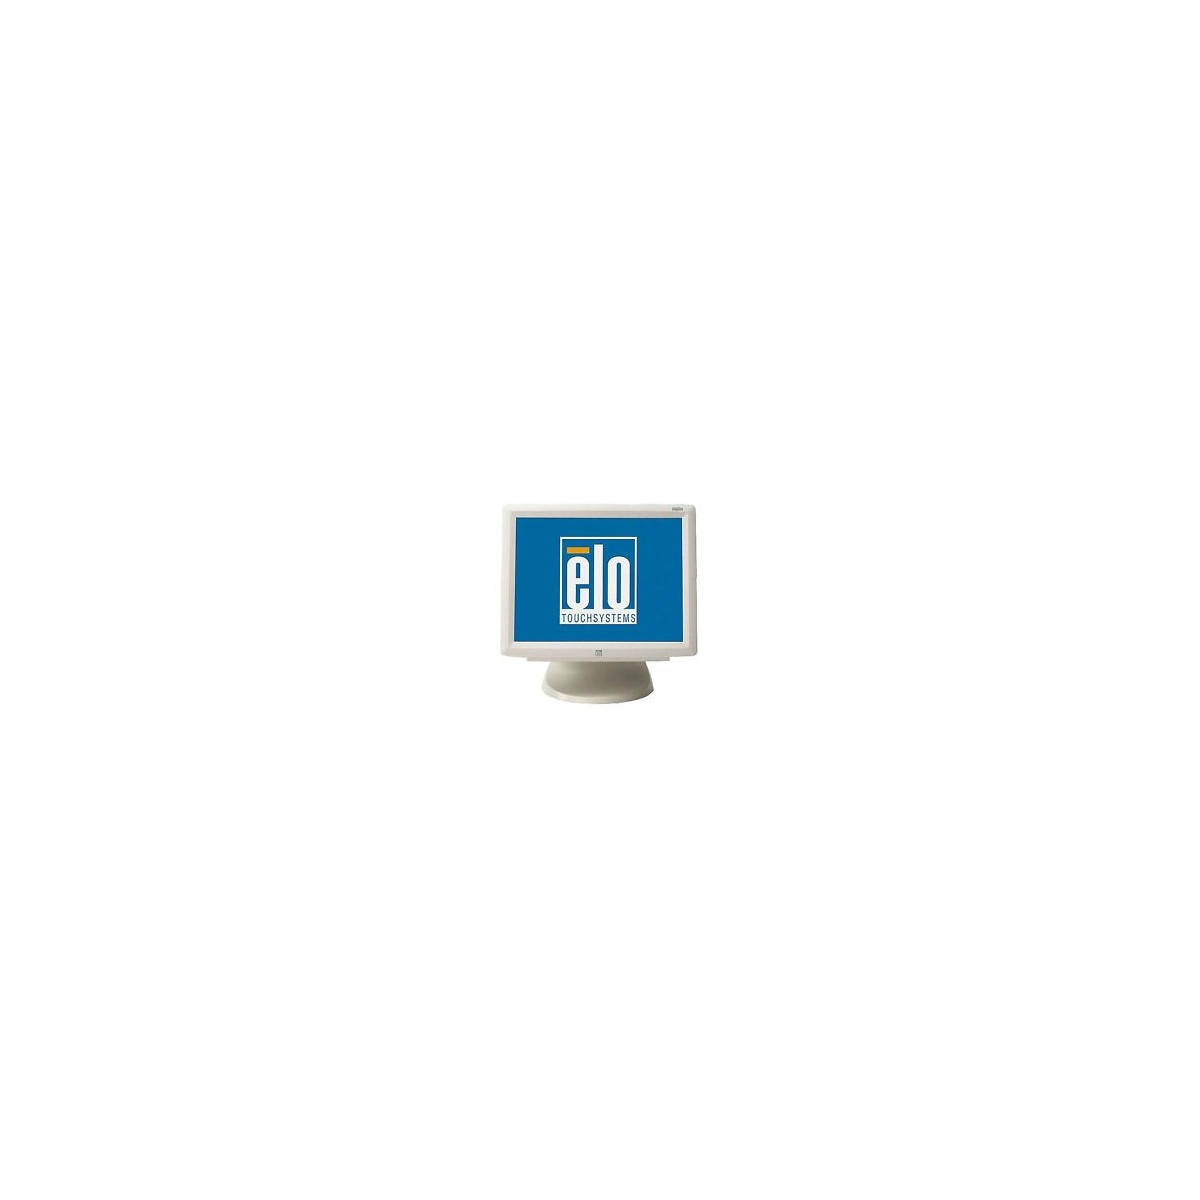 Elo Touch Solutions Elo Touch Solution 1723L - 43.2 cm (17) - 215 cd-m² - 5:4 - 1280 x 1024 pixels - 30 ms - 800:1